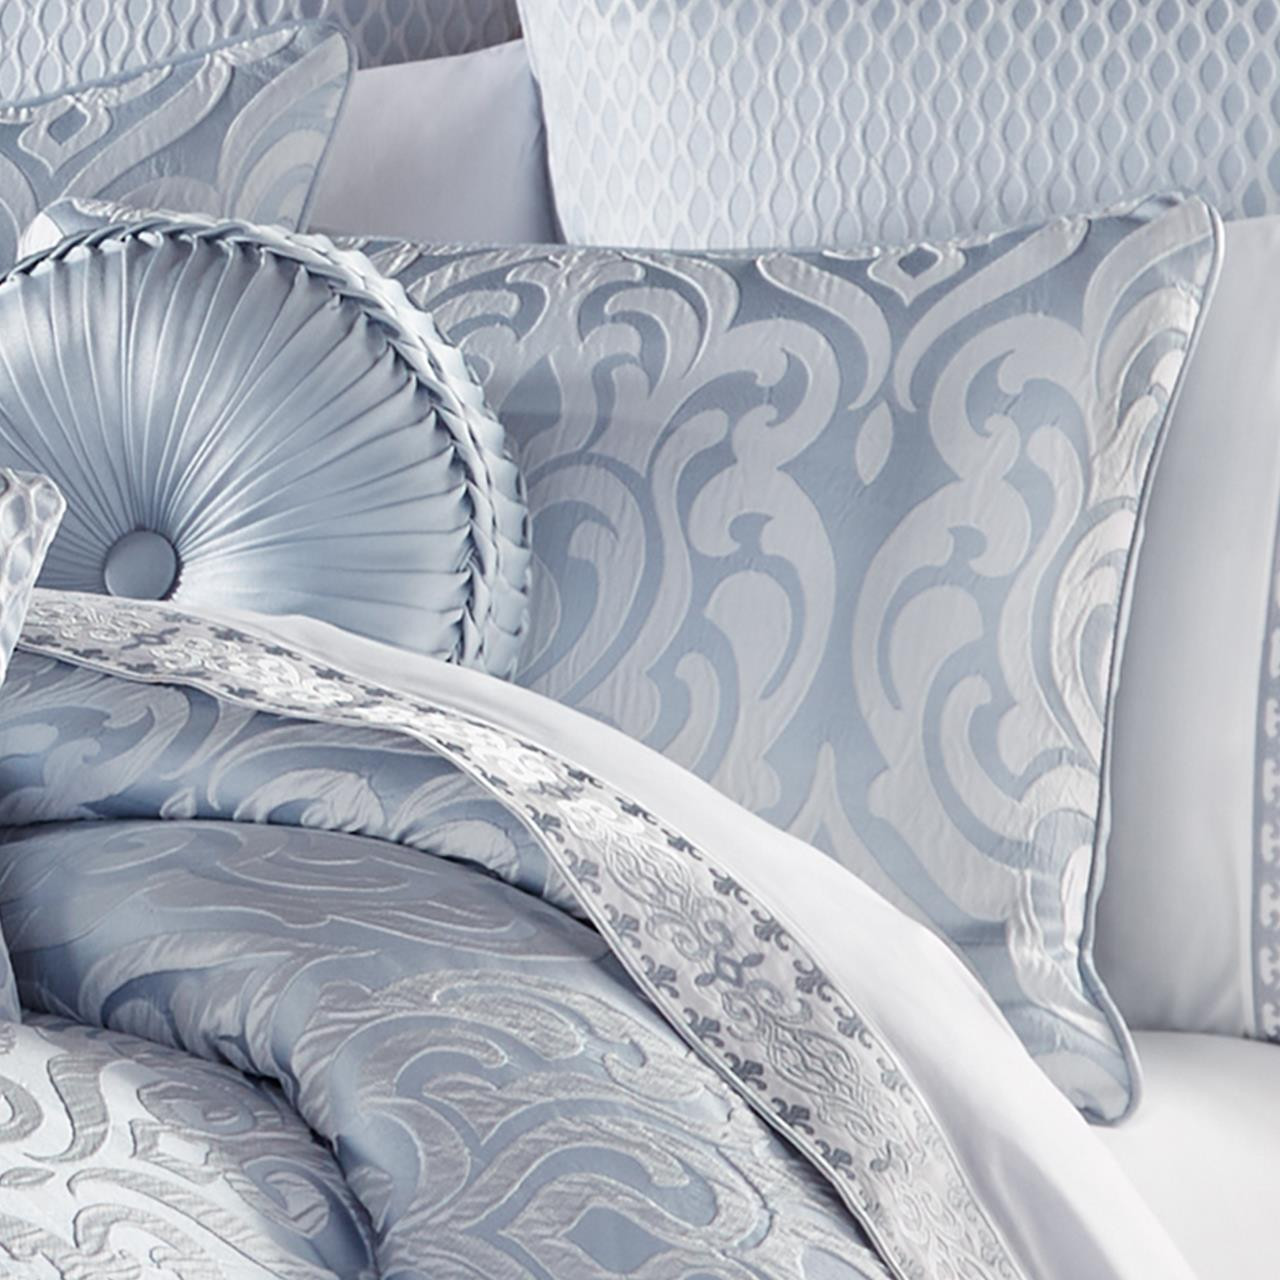 Liana Powder Blue Comforter Collection -